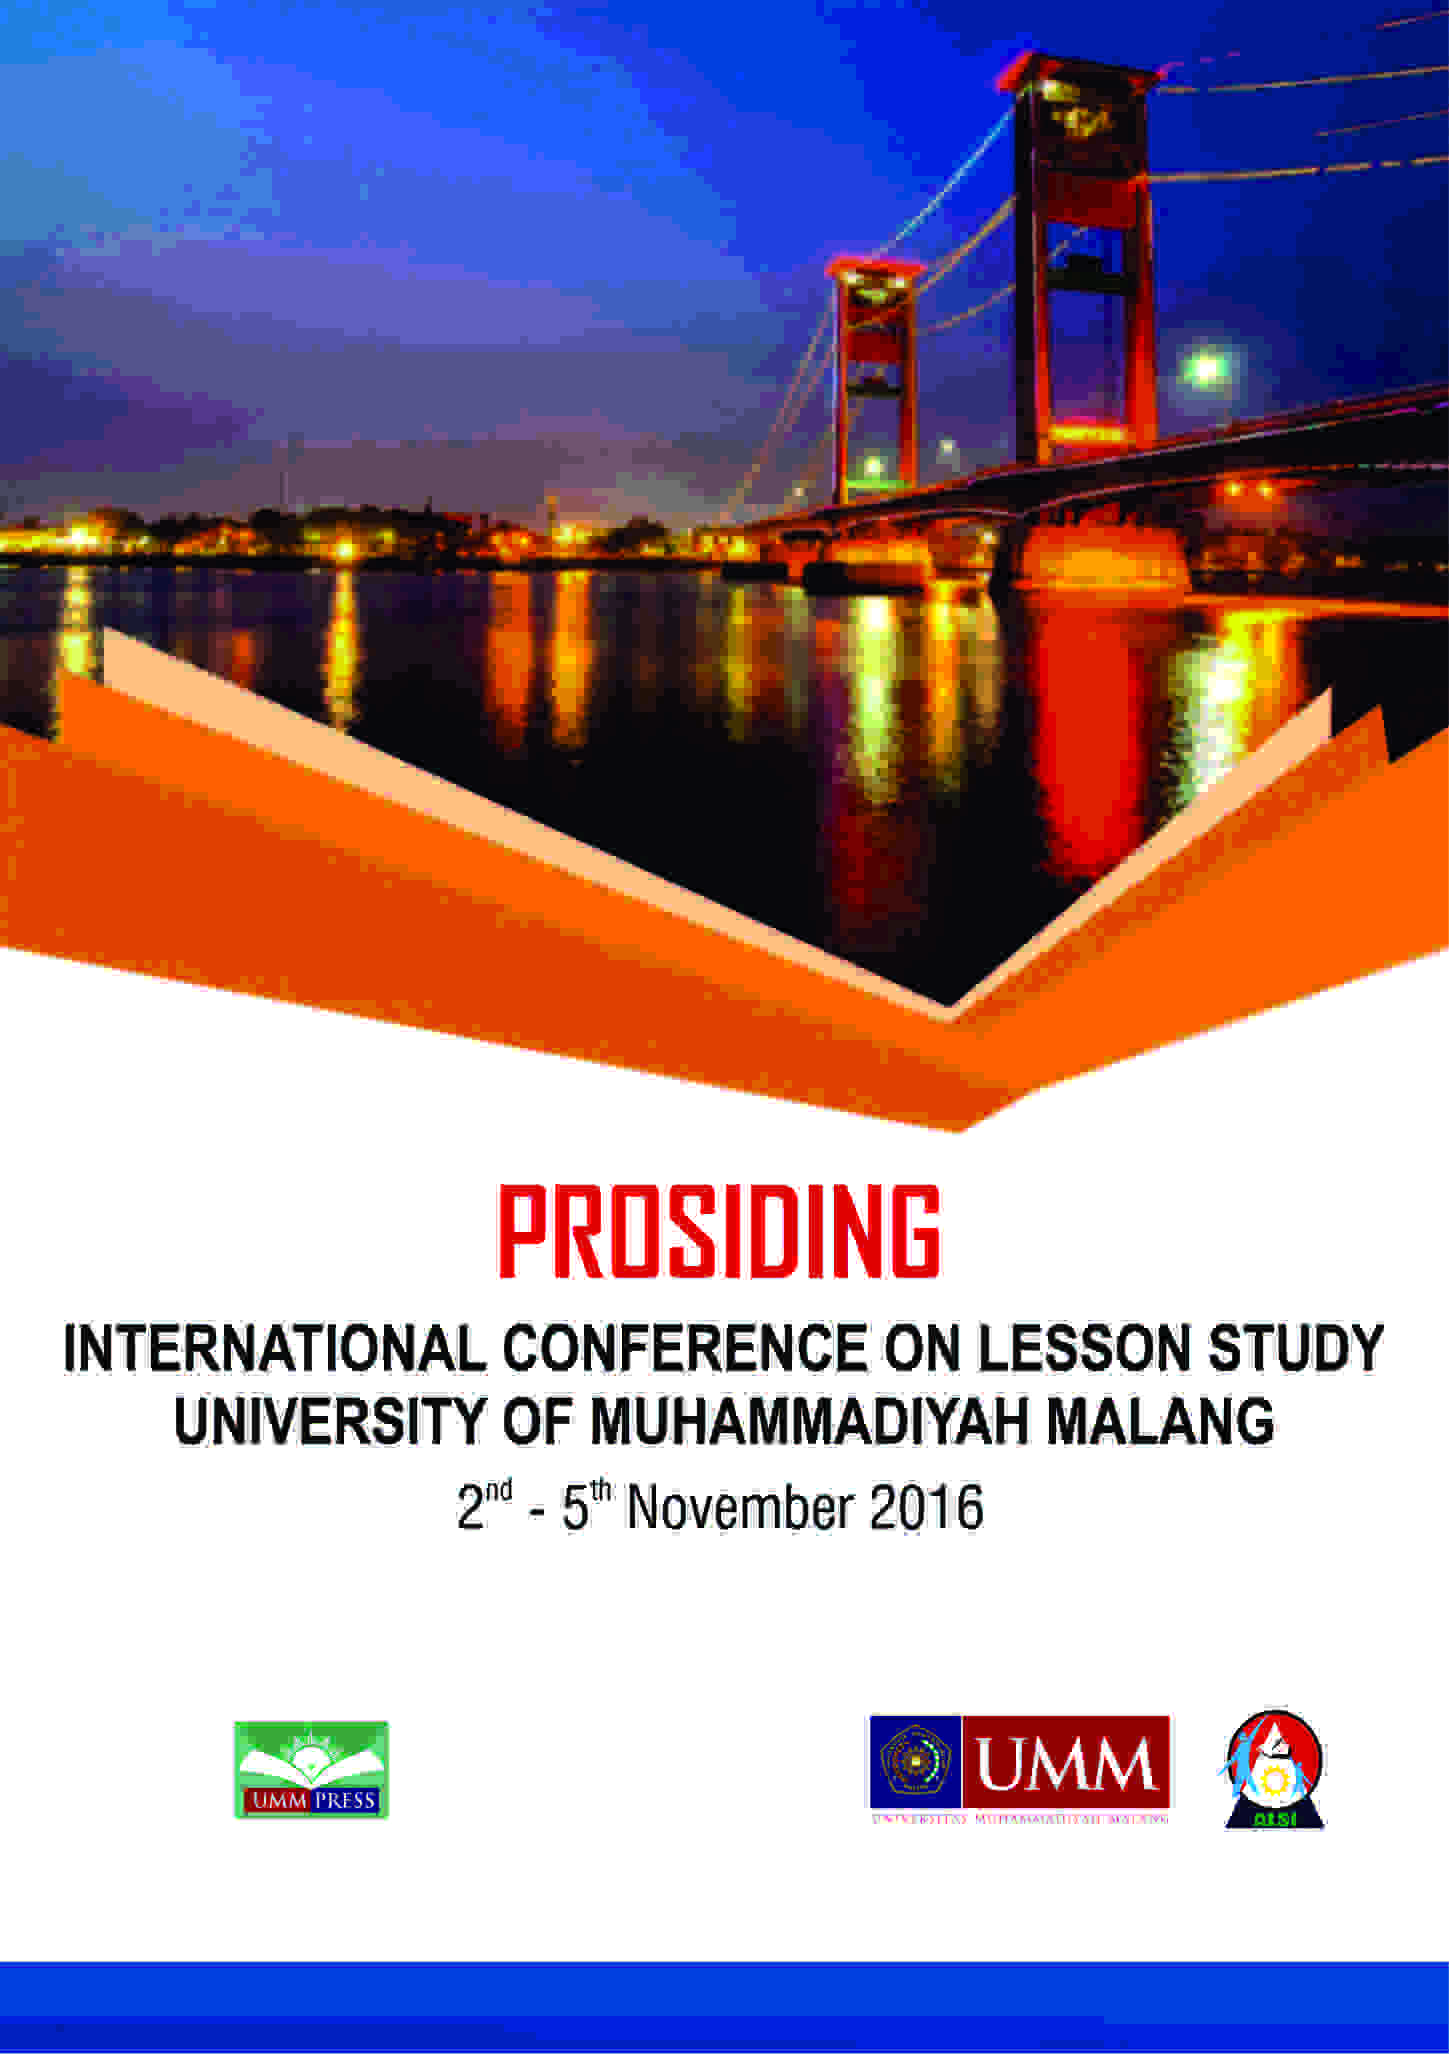 PROSIDING INTERNATIONAL CONFERENCE ON LESSON STUDY UNIVERSITY OF MUHAMMADIYAH MALANG